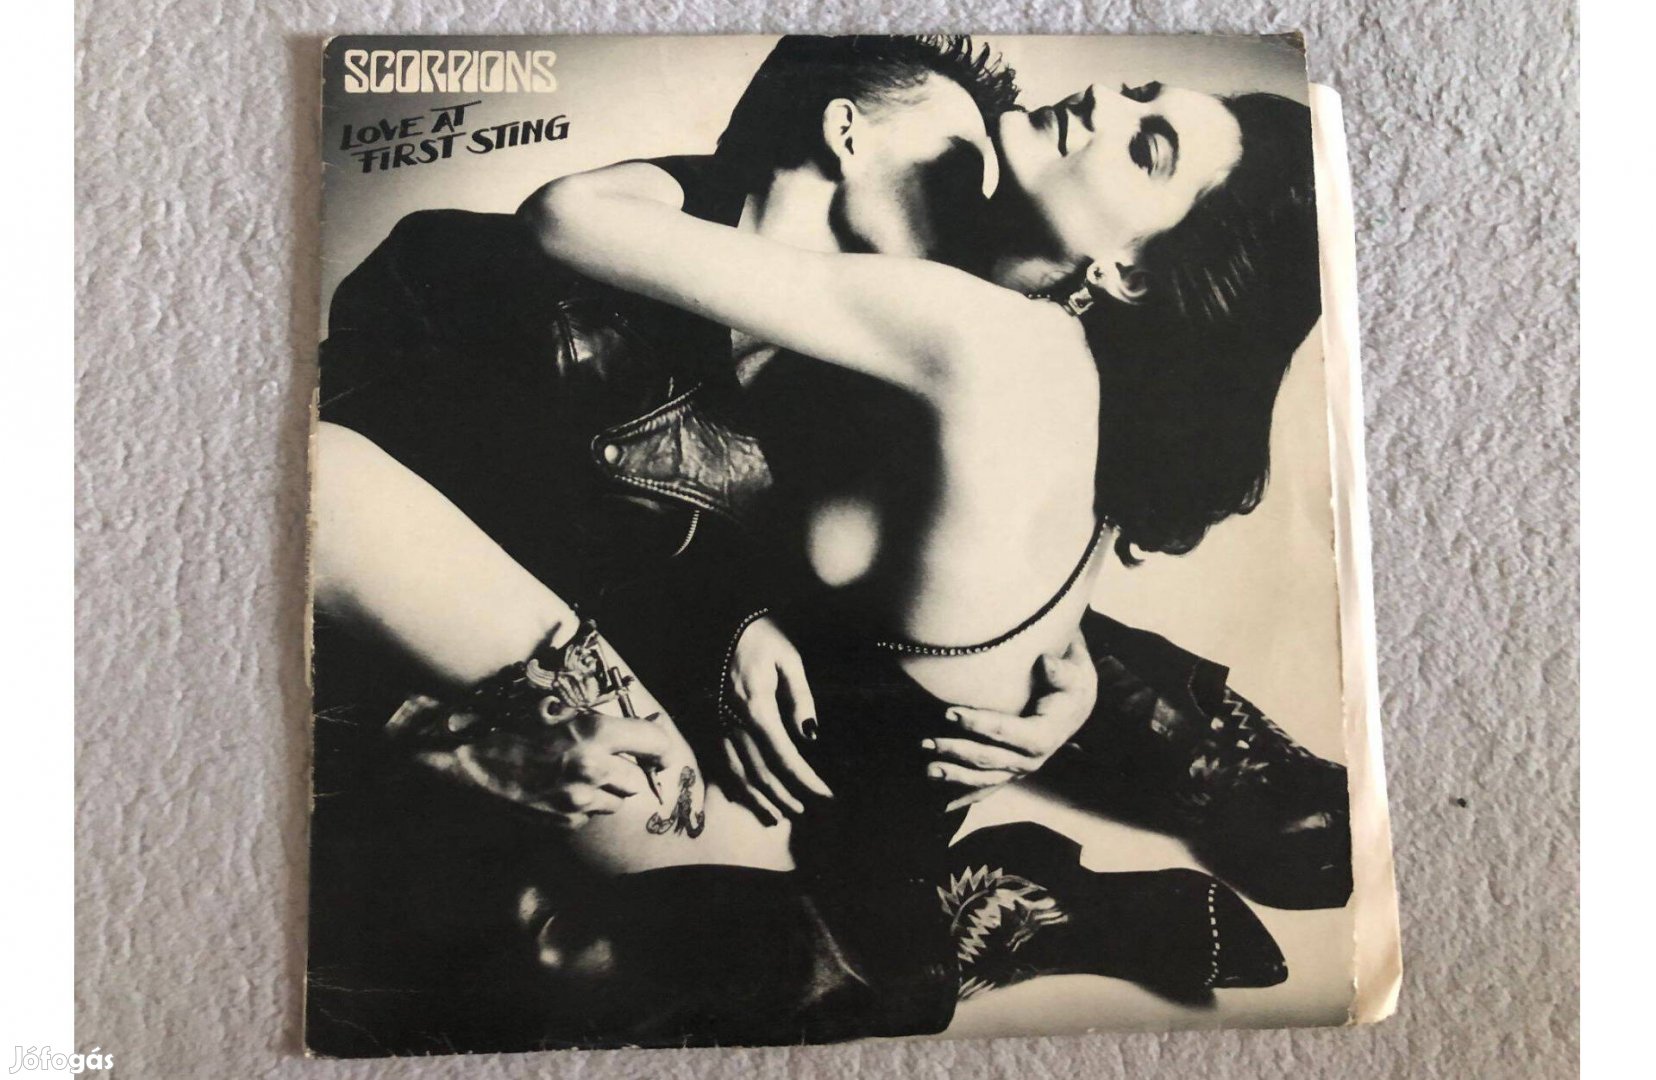 Scorpions - Love at First Sting bakelit LP